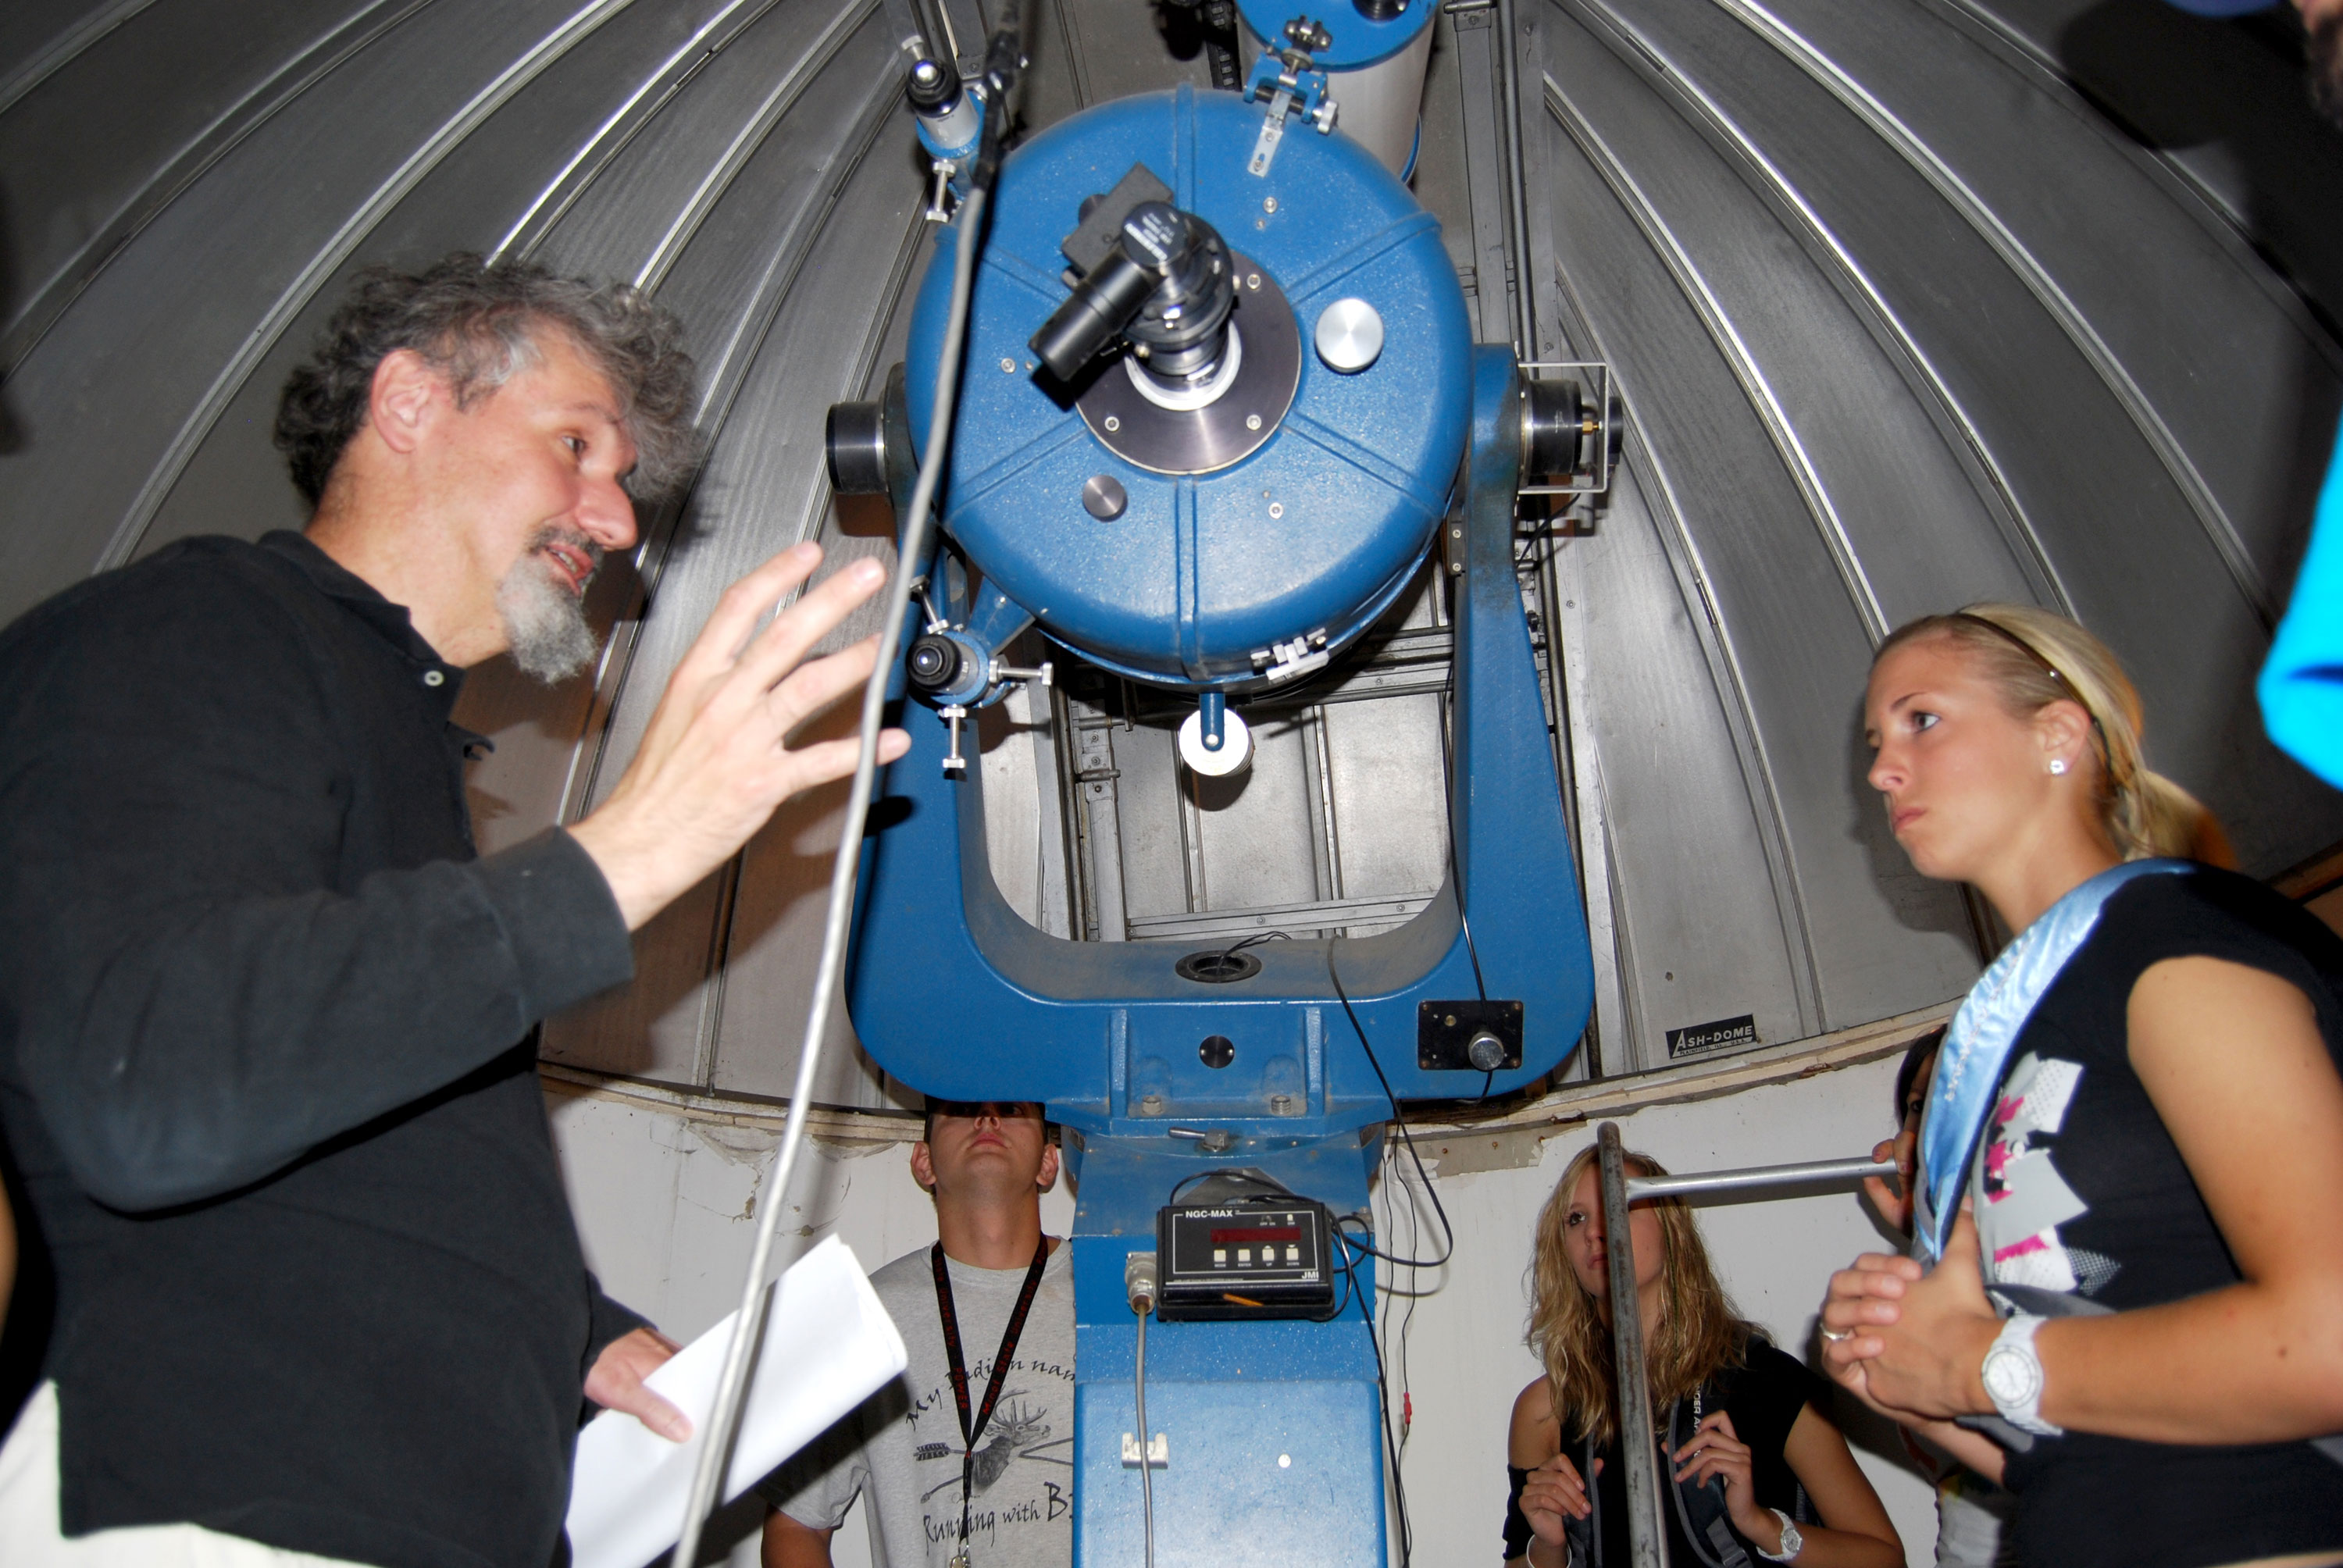 Inside the observatory